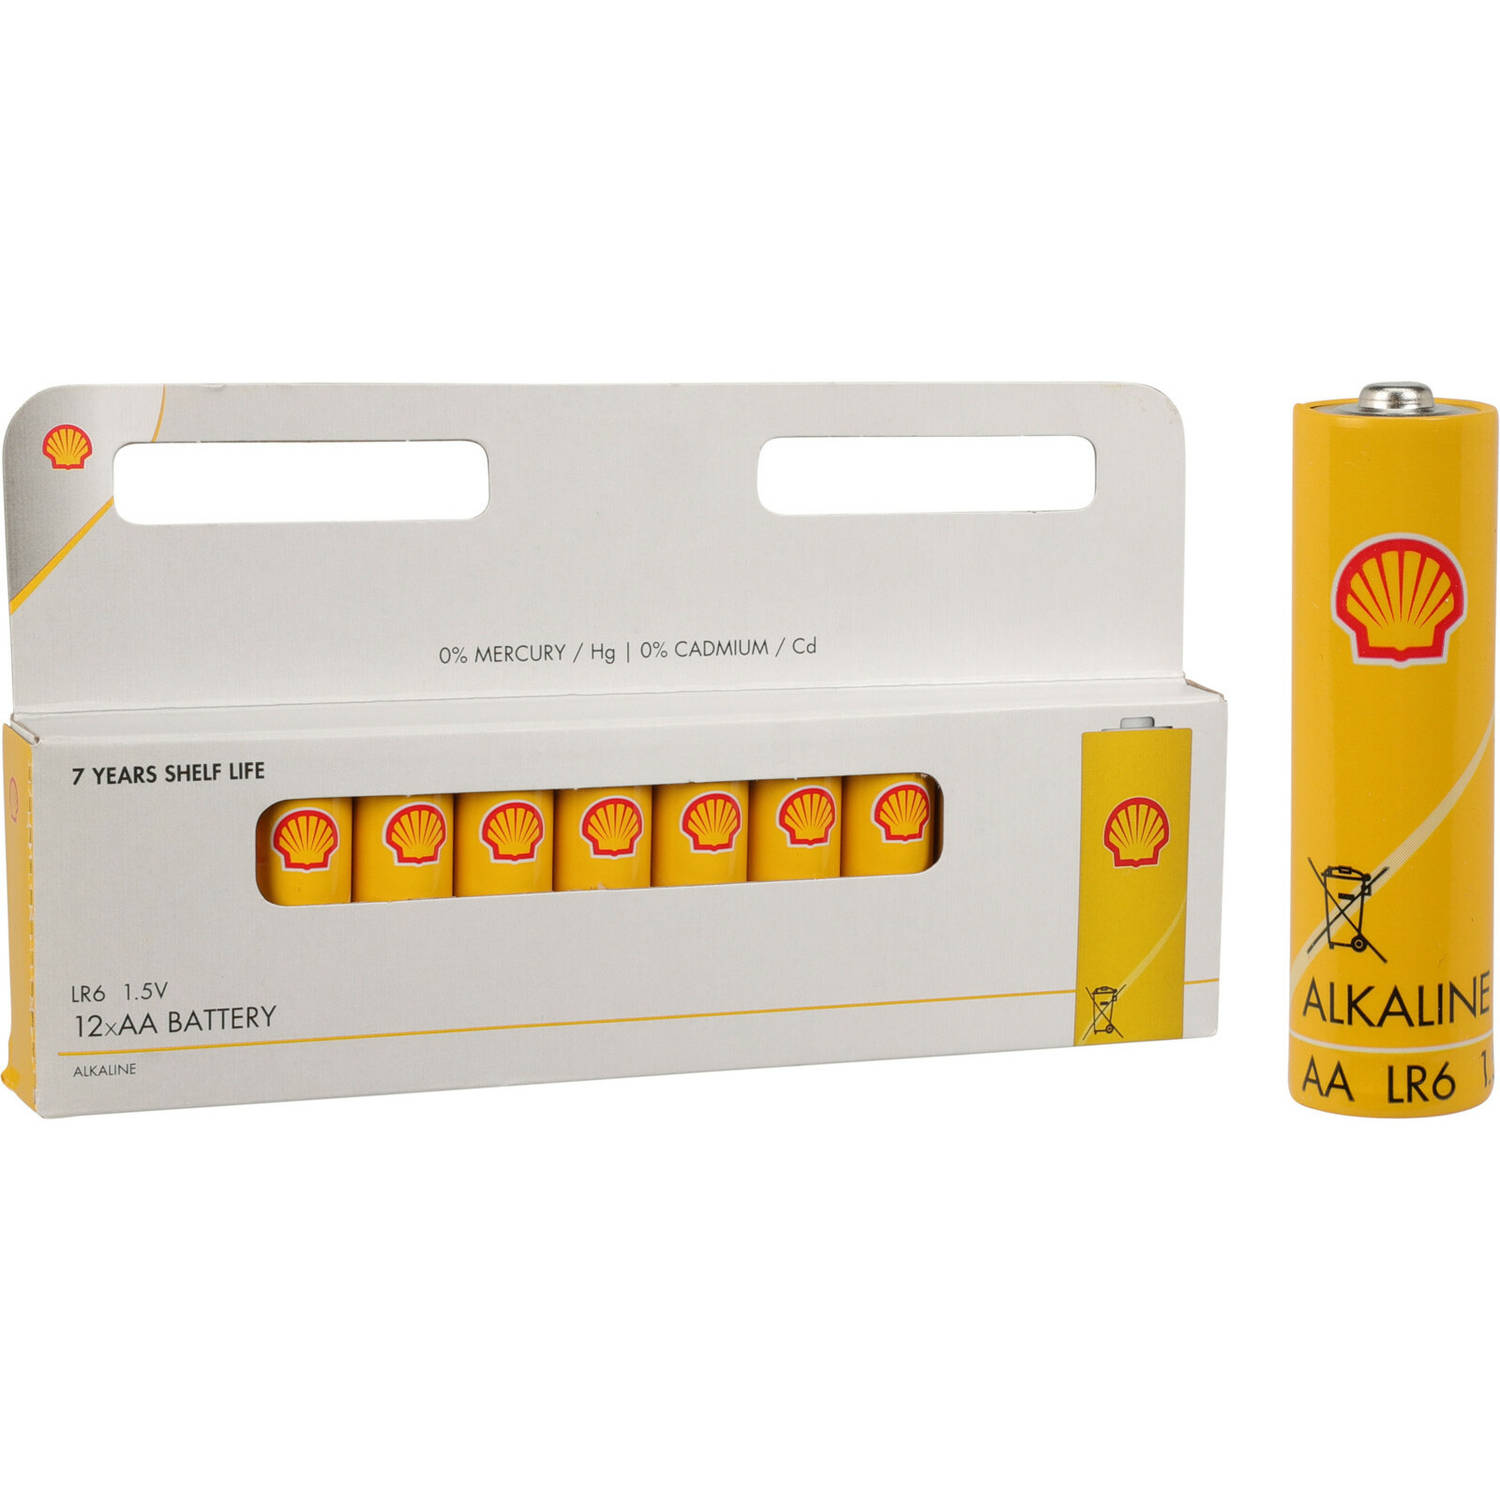 Shell Batterijen Penlite - AA type - 12x stuks - Alkaline - Long life